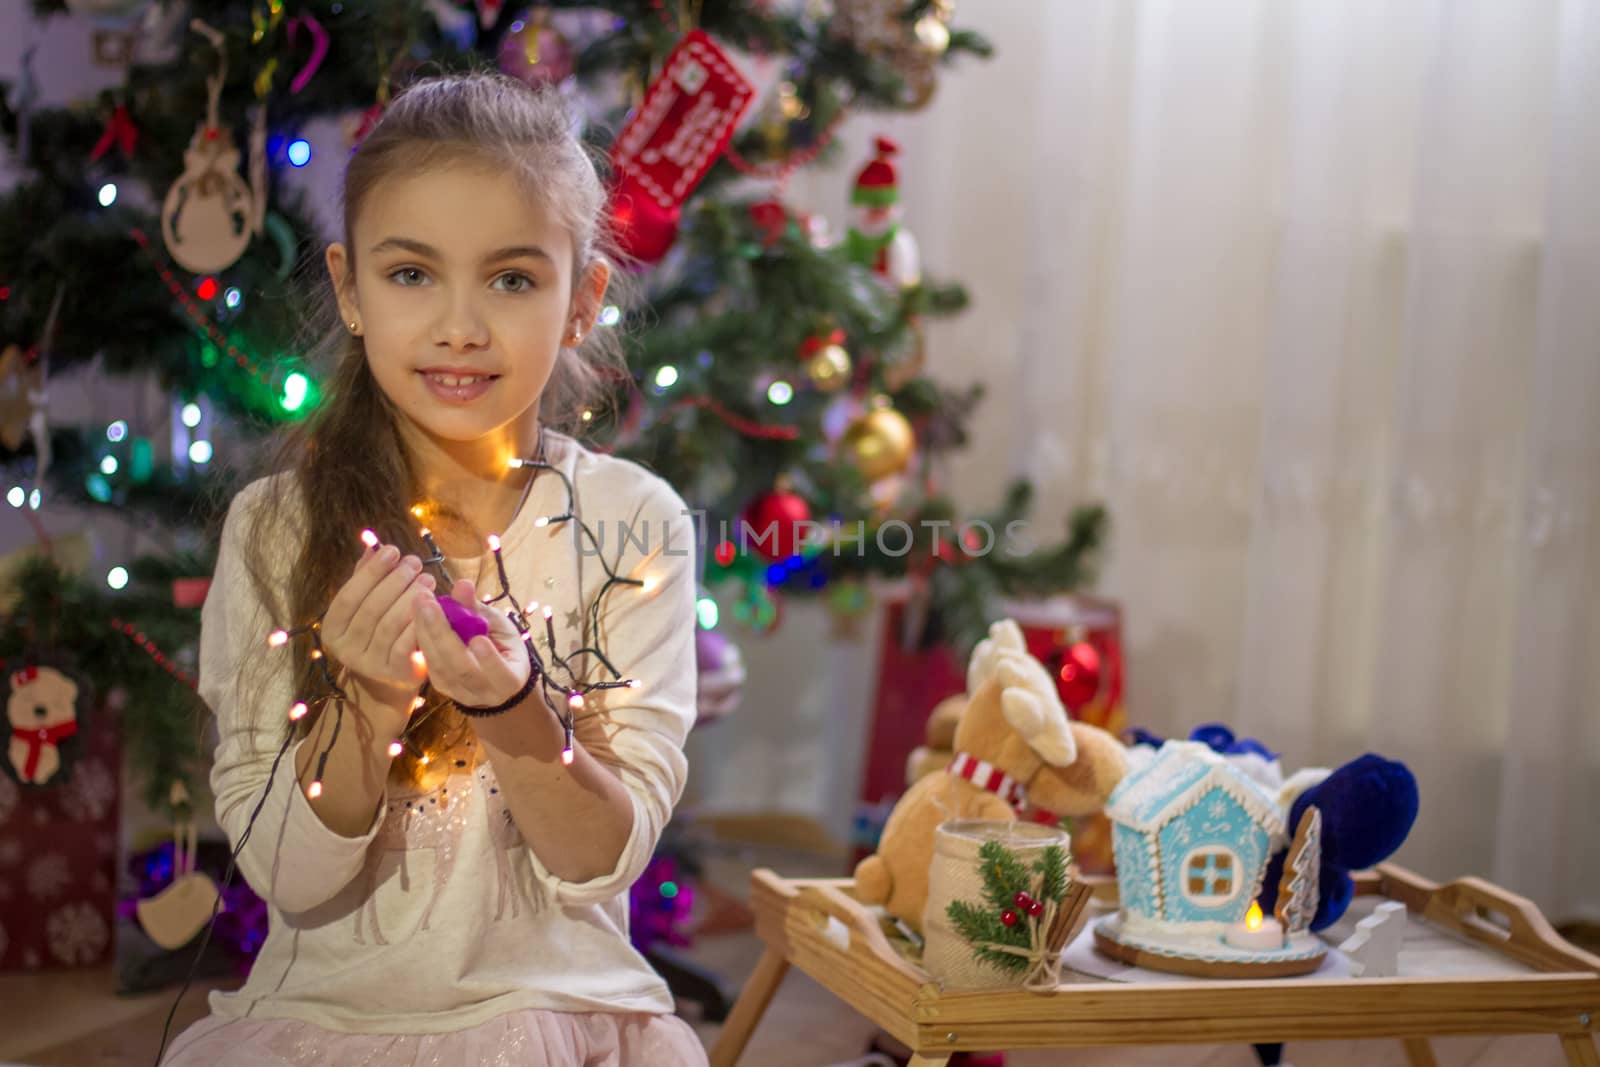 Sweet girl holding lights over Christmas decoration 